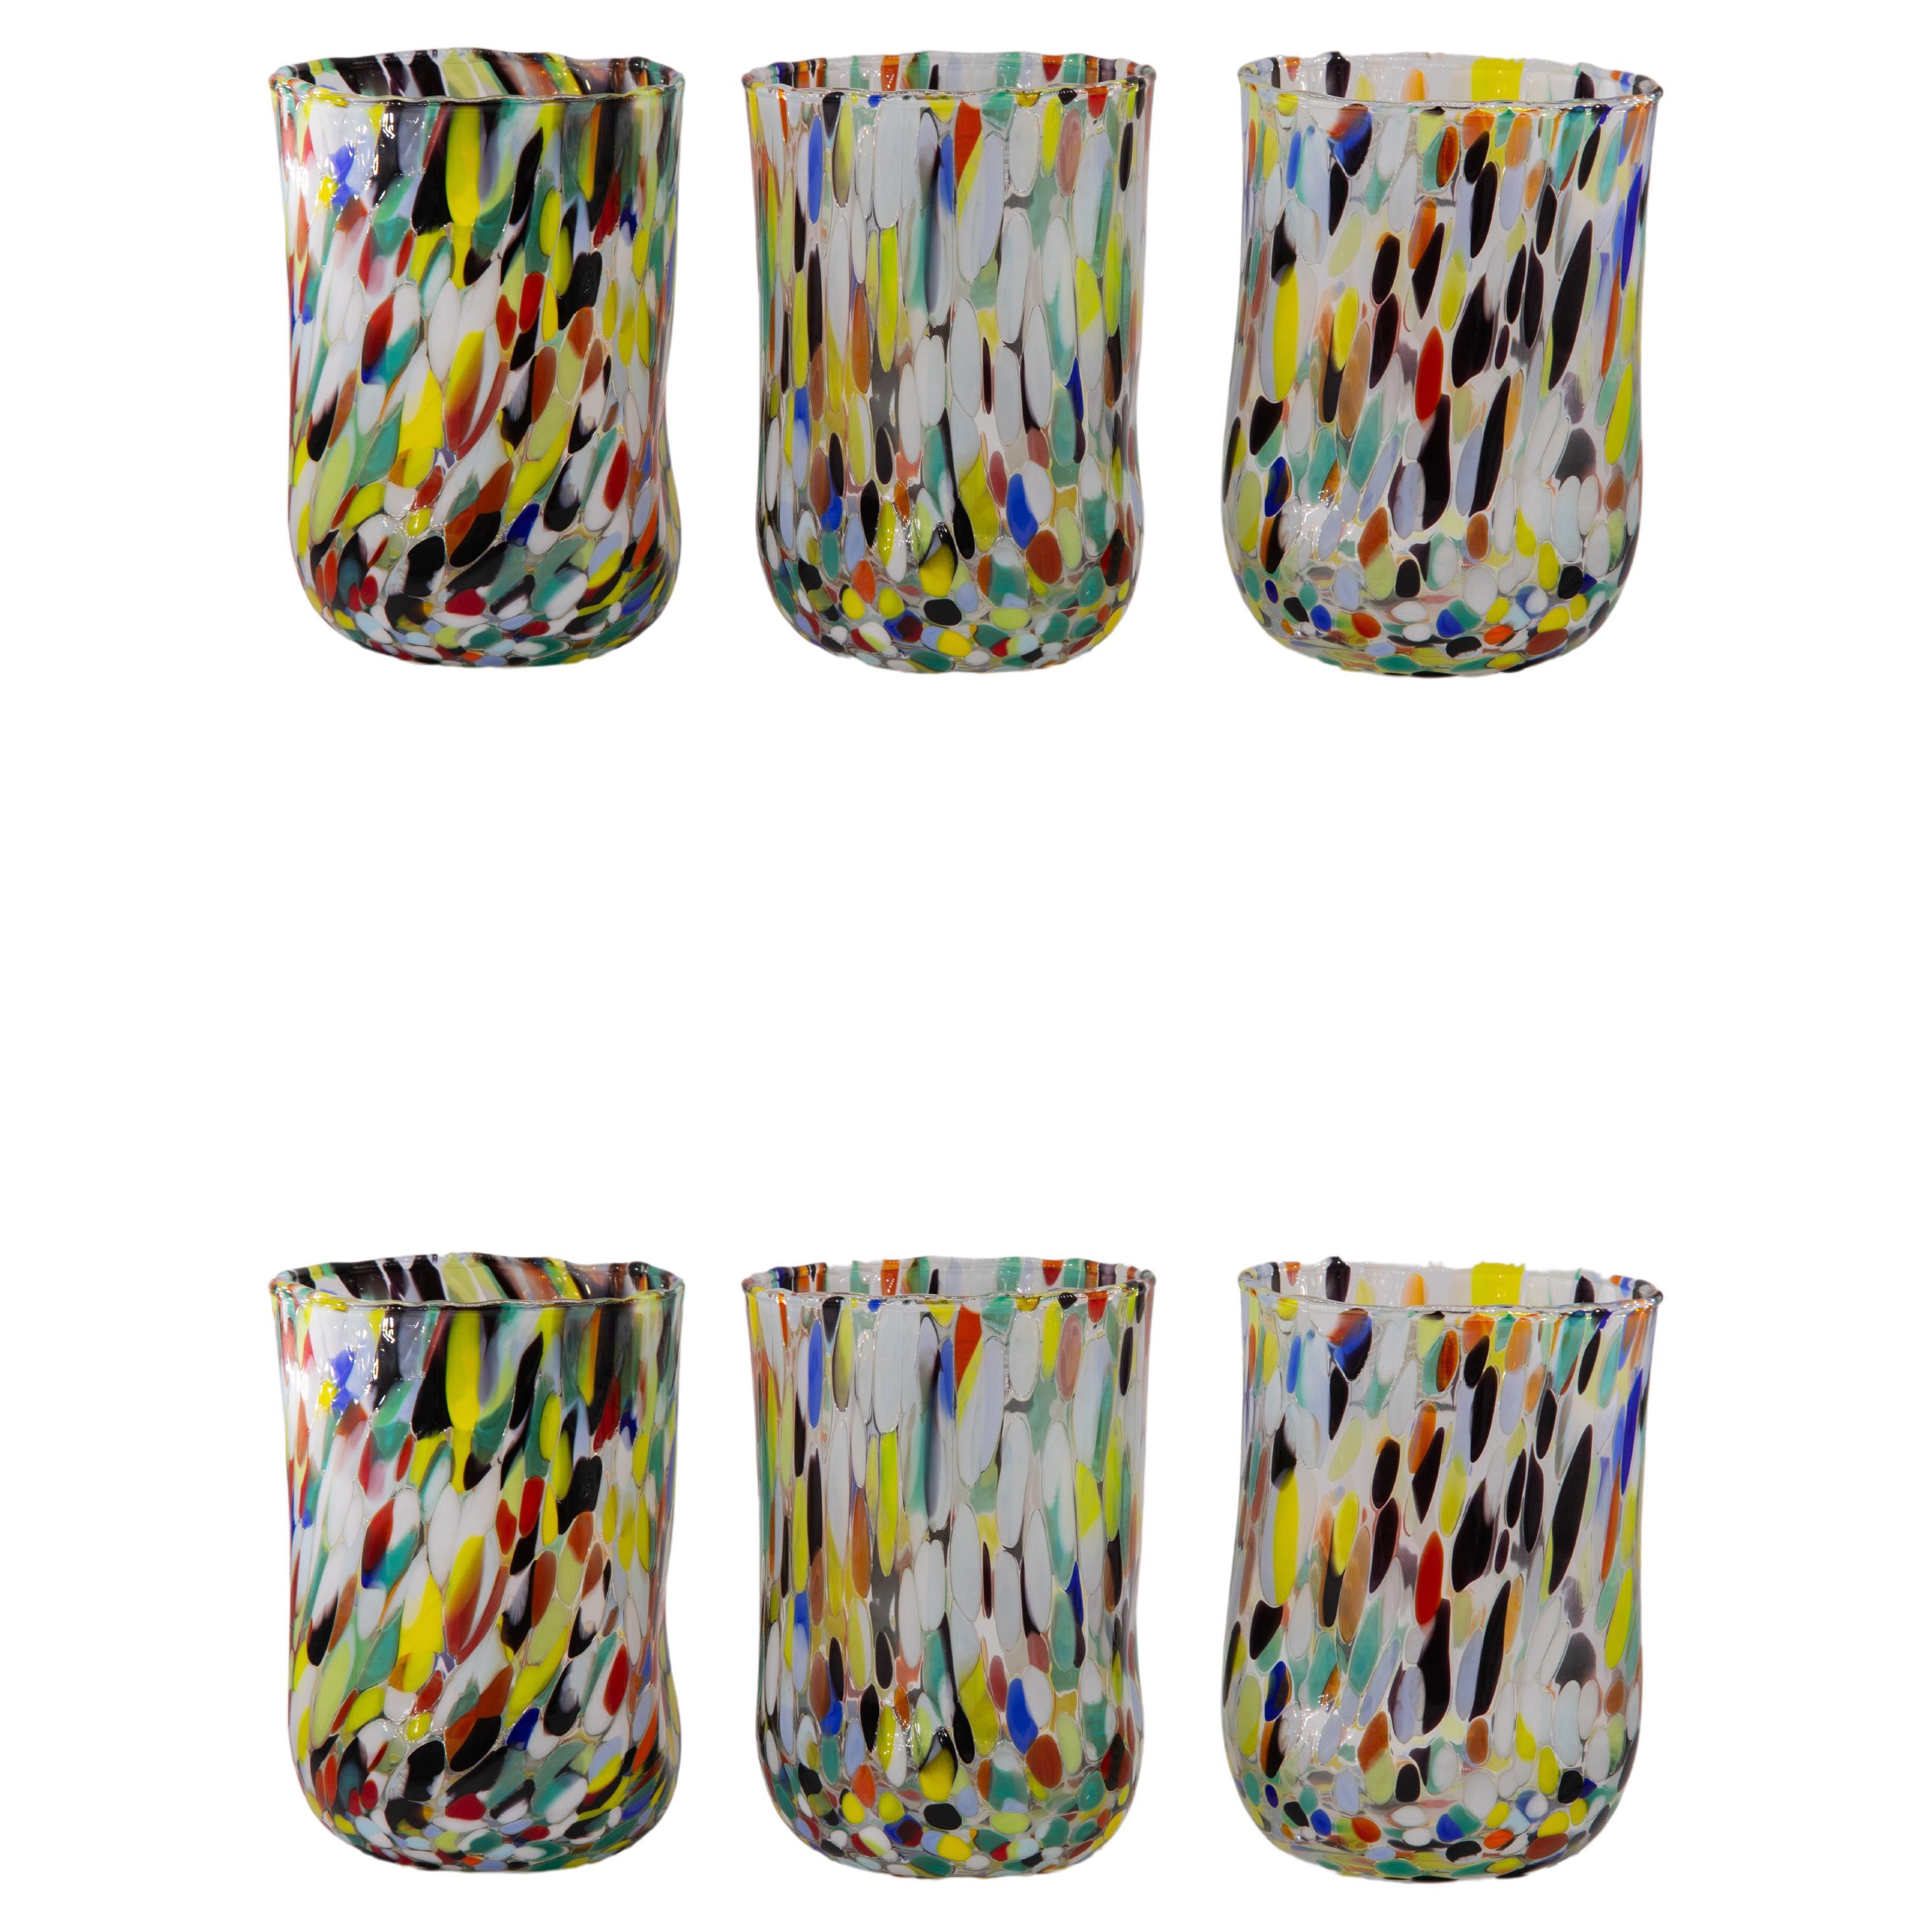 Honolulu, ensemble de 6 verres de Murano couleur Arlecchino, faits à la main, verre de Murano